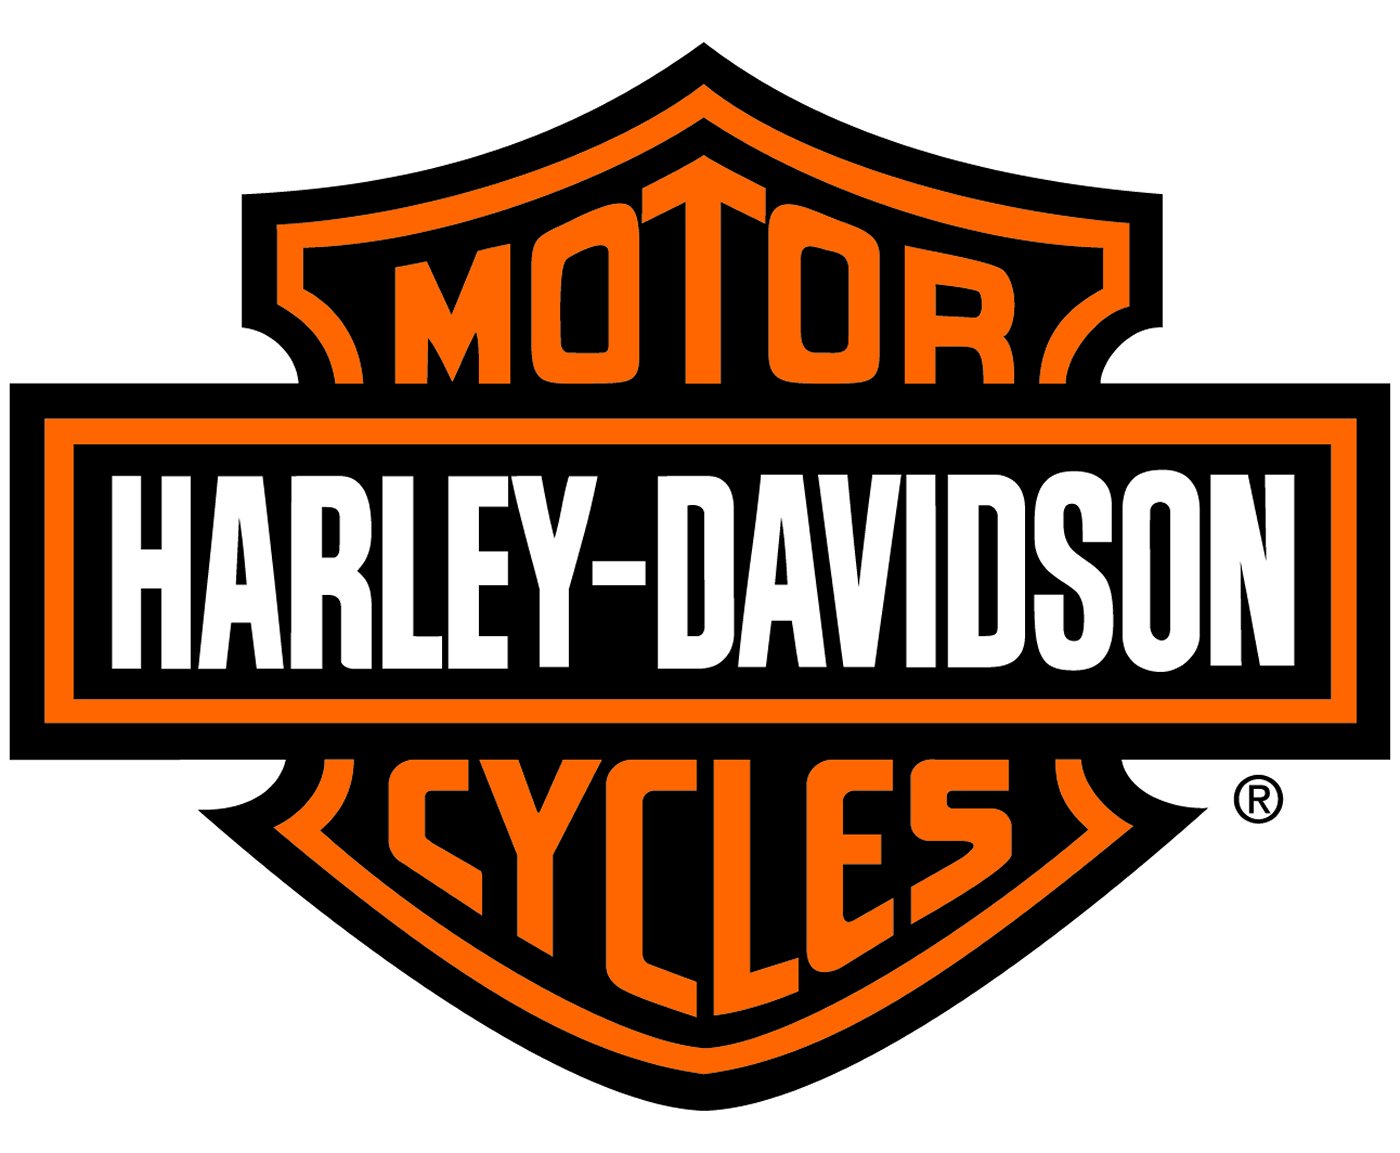 Harley davidson logo rides without words duetsblog jpg